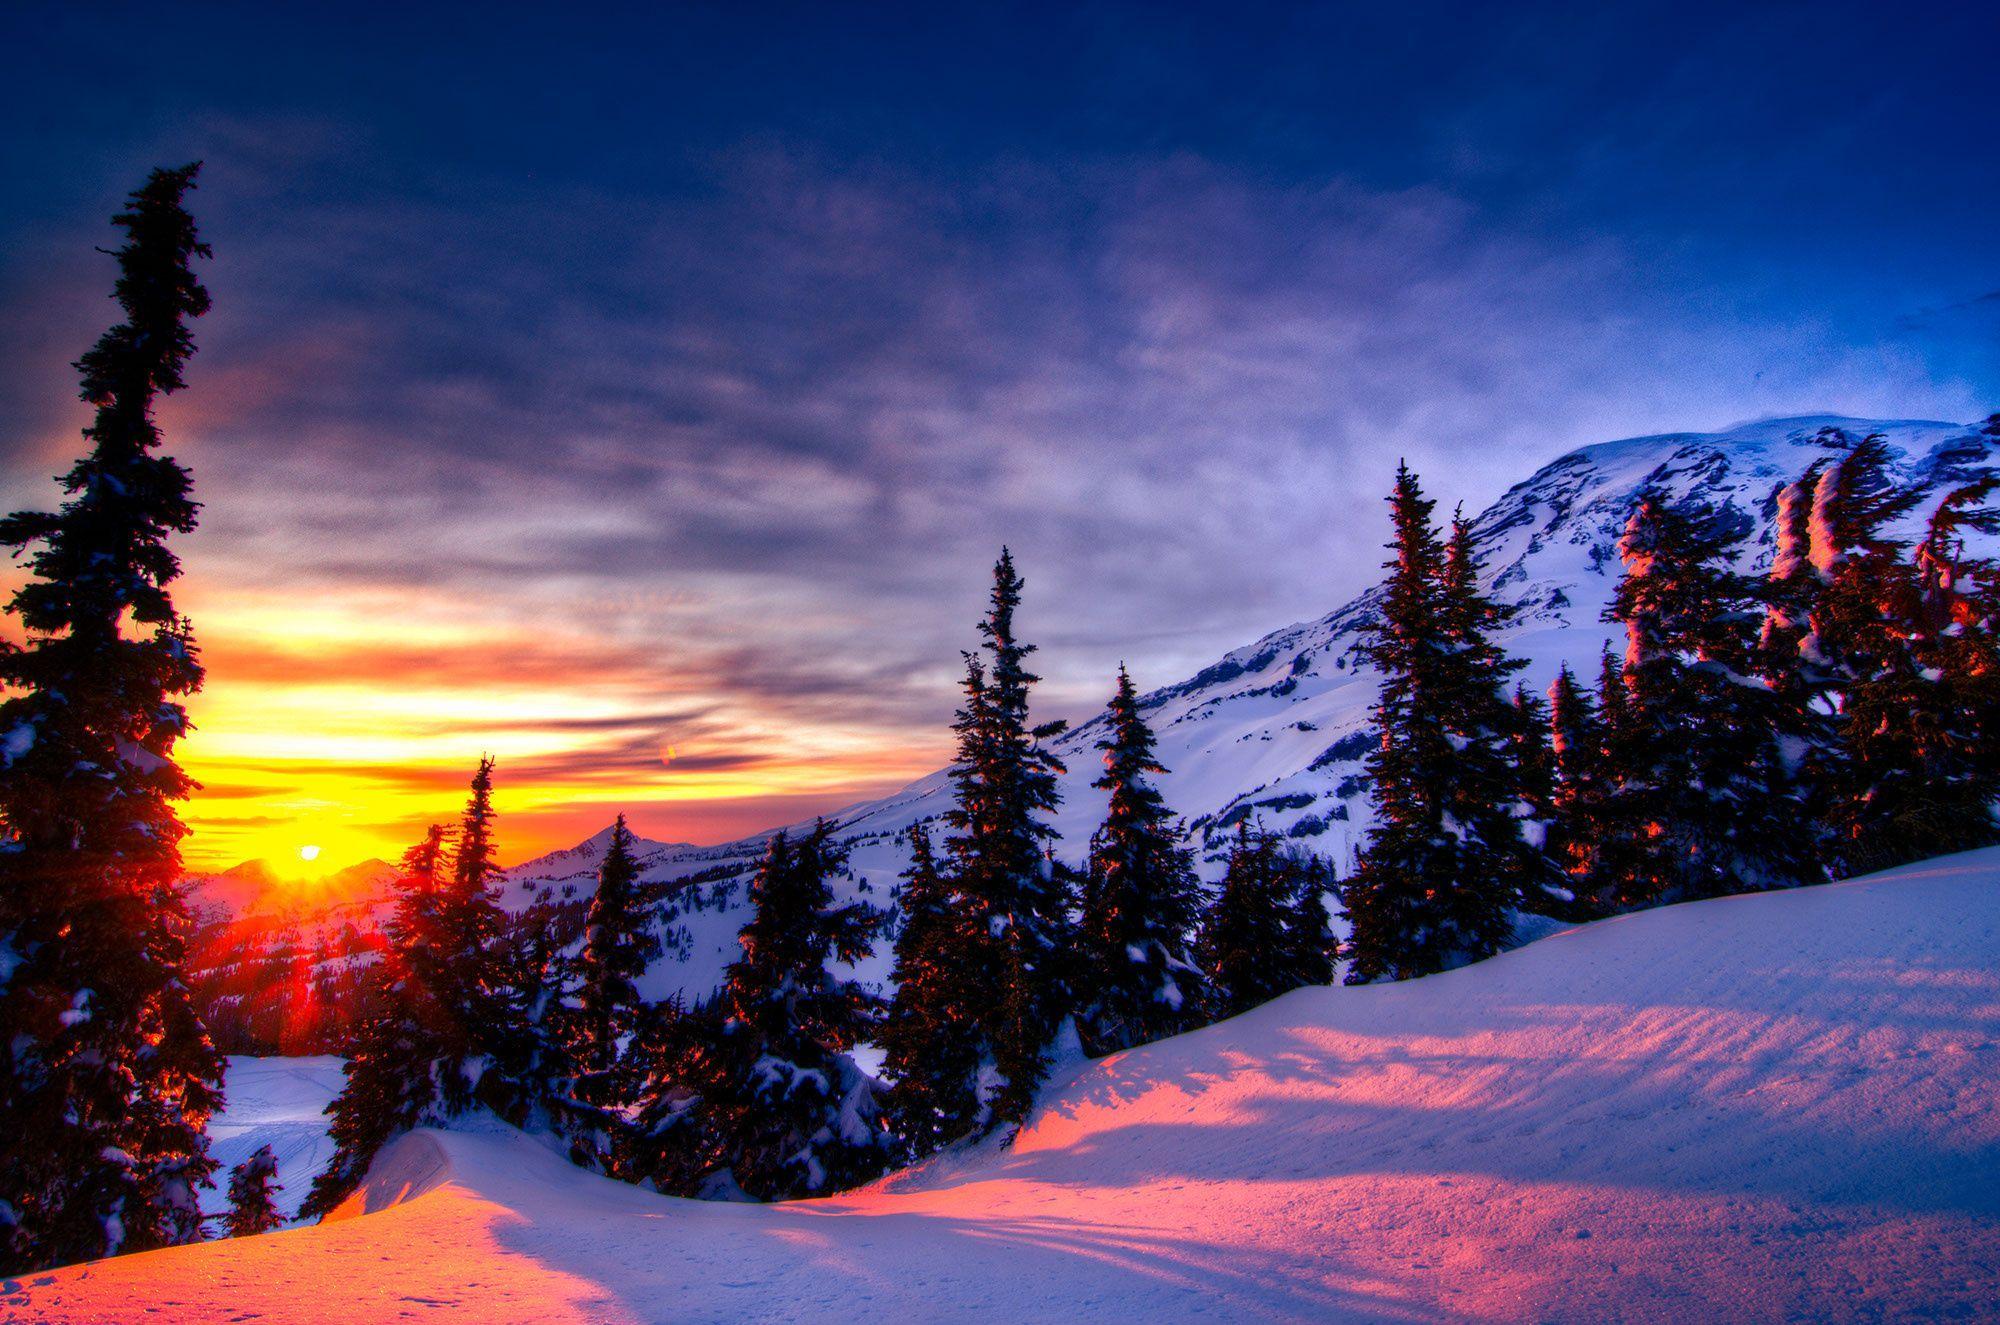 Winter Sunset Desktop Wallpapers Top Free Winter Sunset Desktop